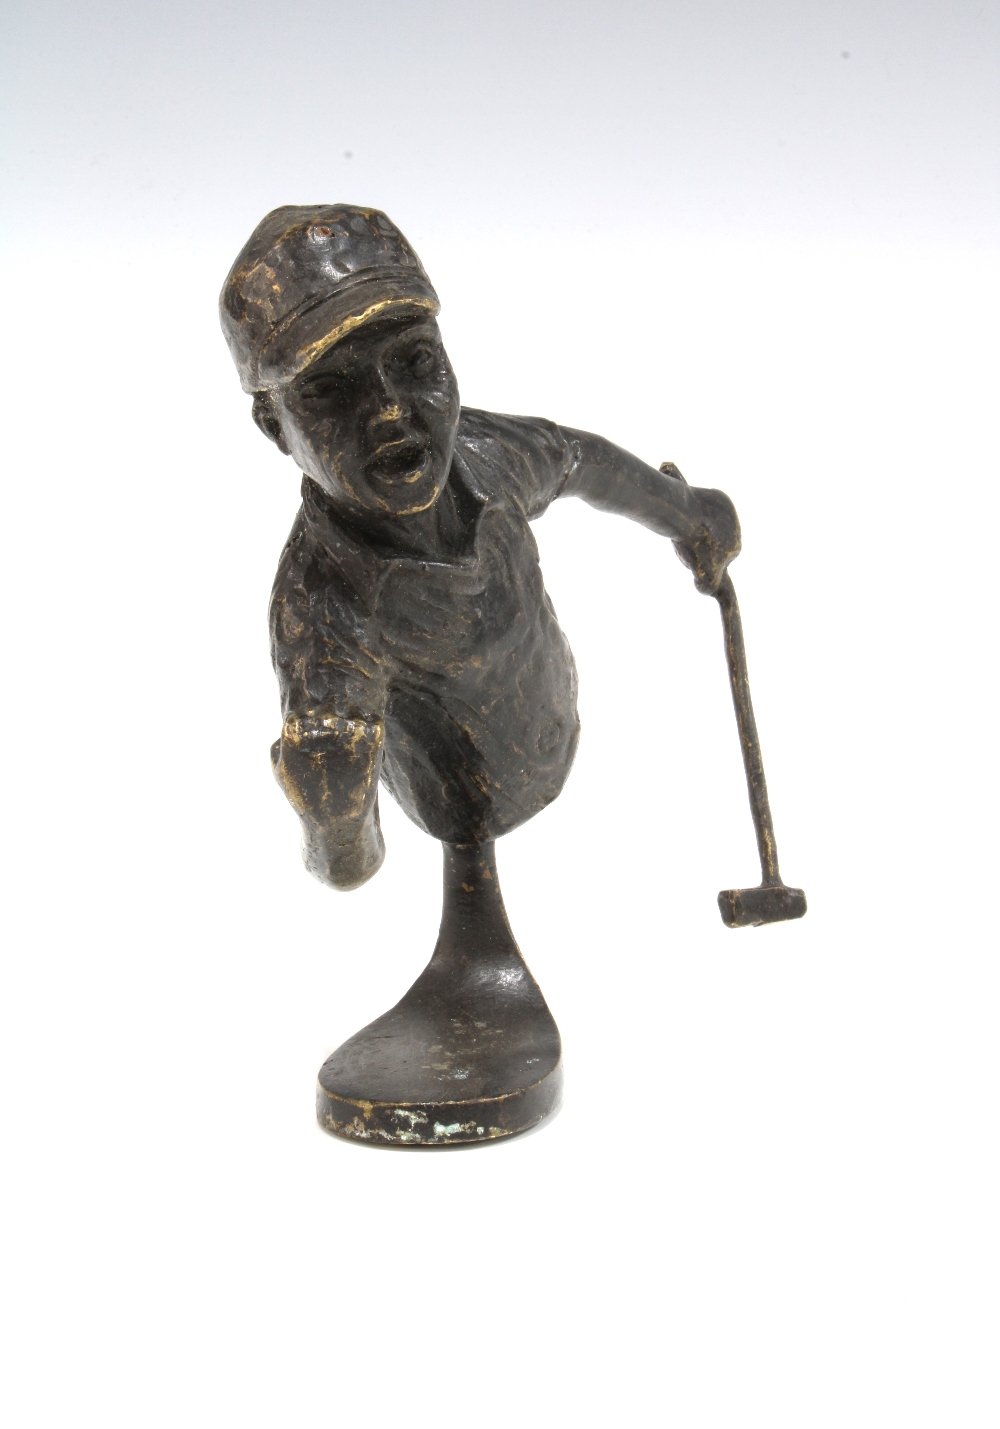 Bronze golf putter figure, on golf club shaped base, 14cm high - Image 2 of 2